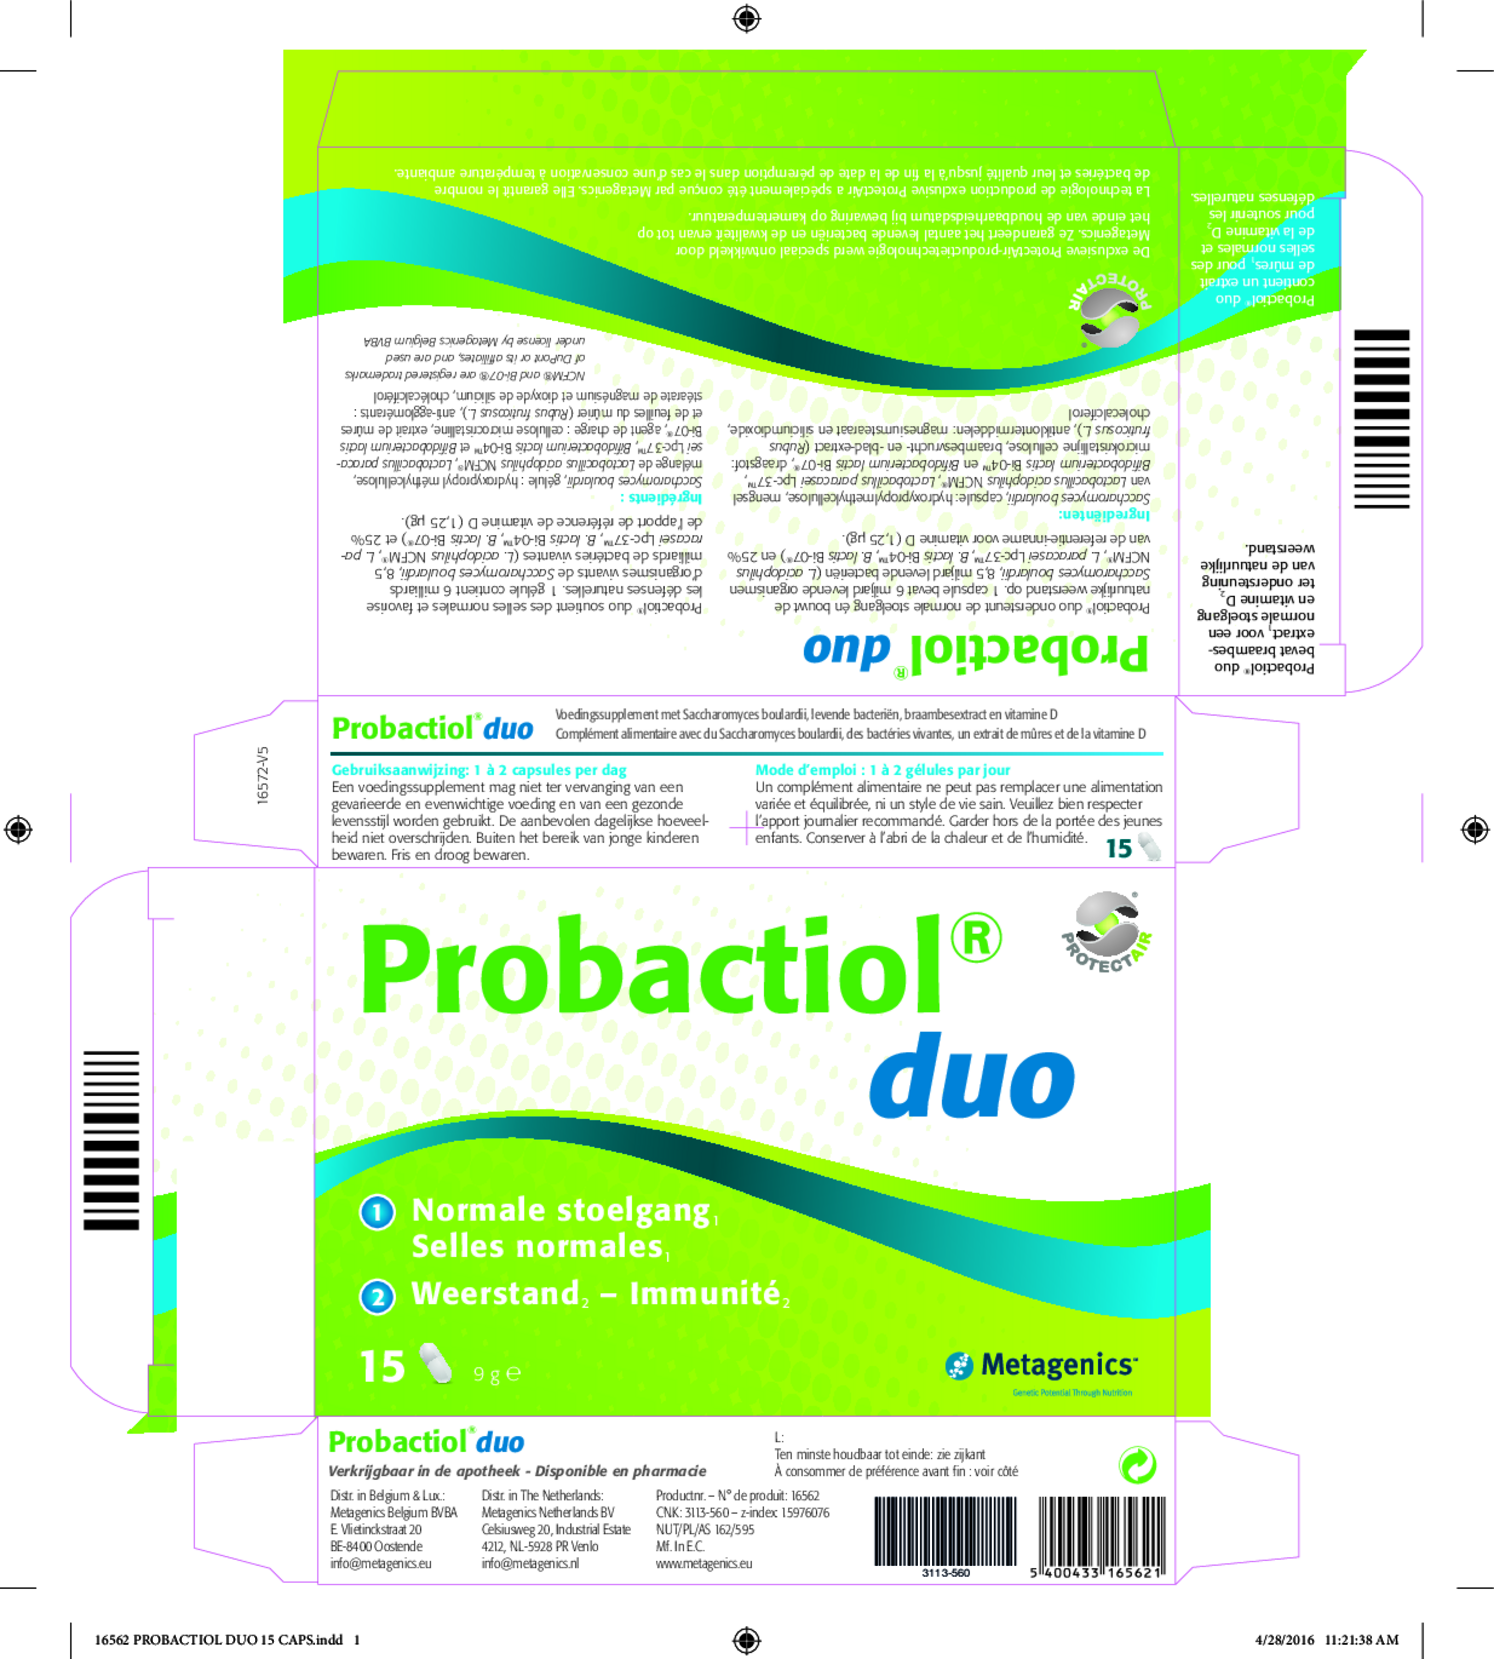 Probactiol Duo Capsules afbeelding van document #1, etiket